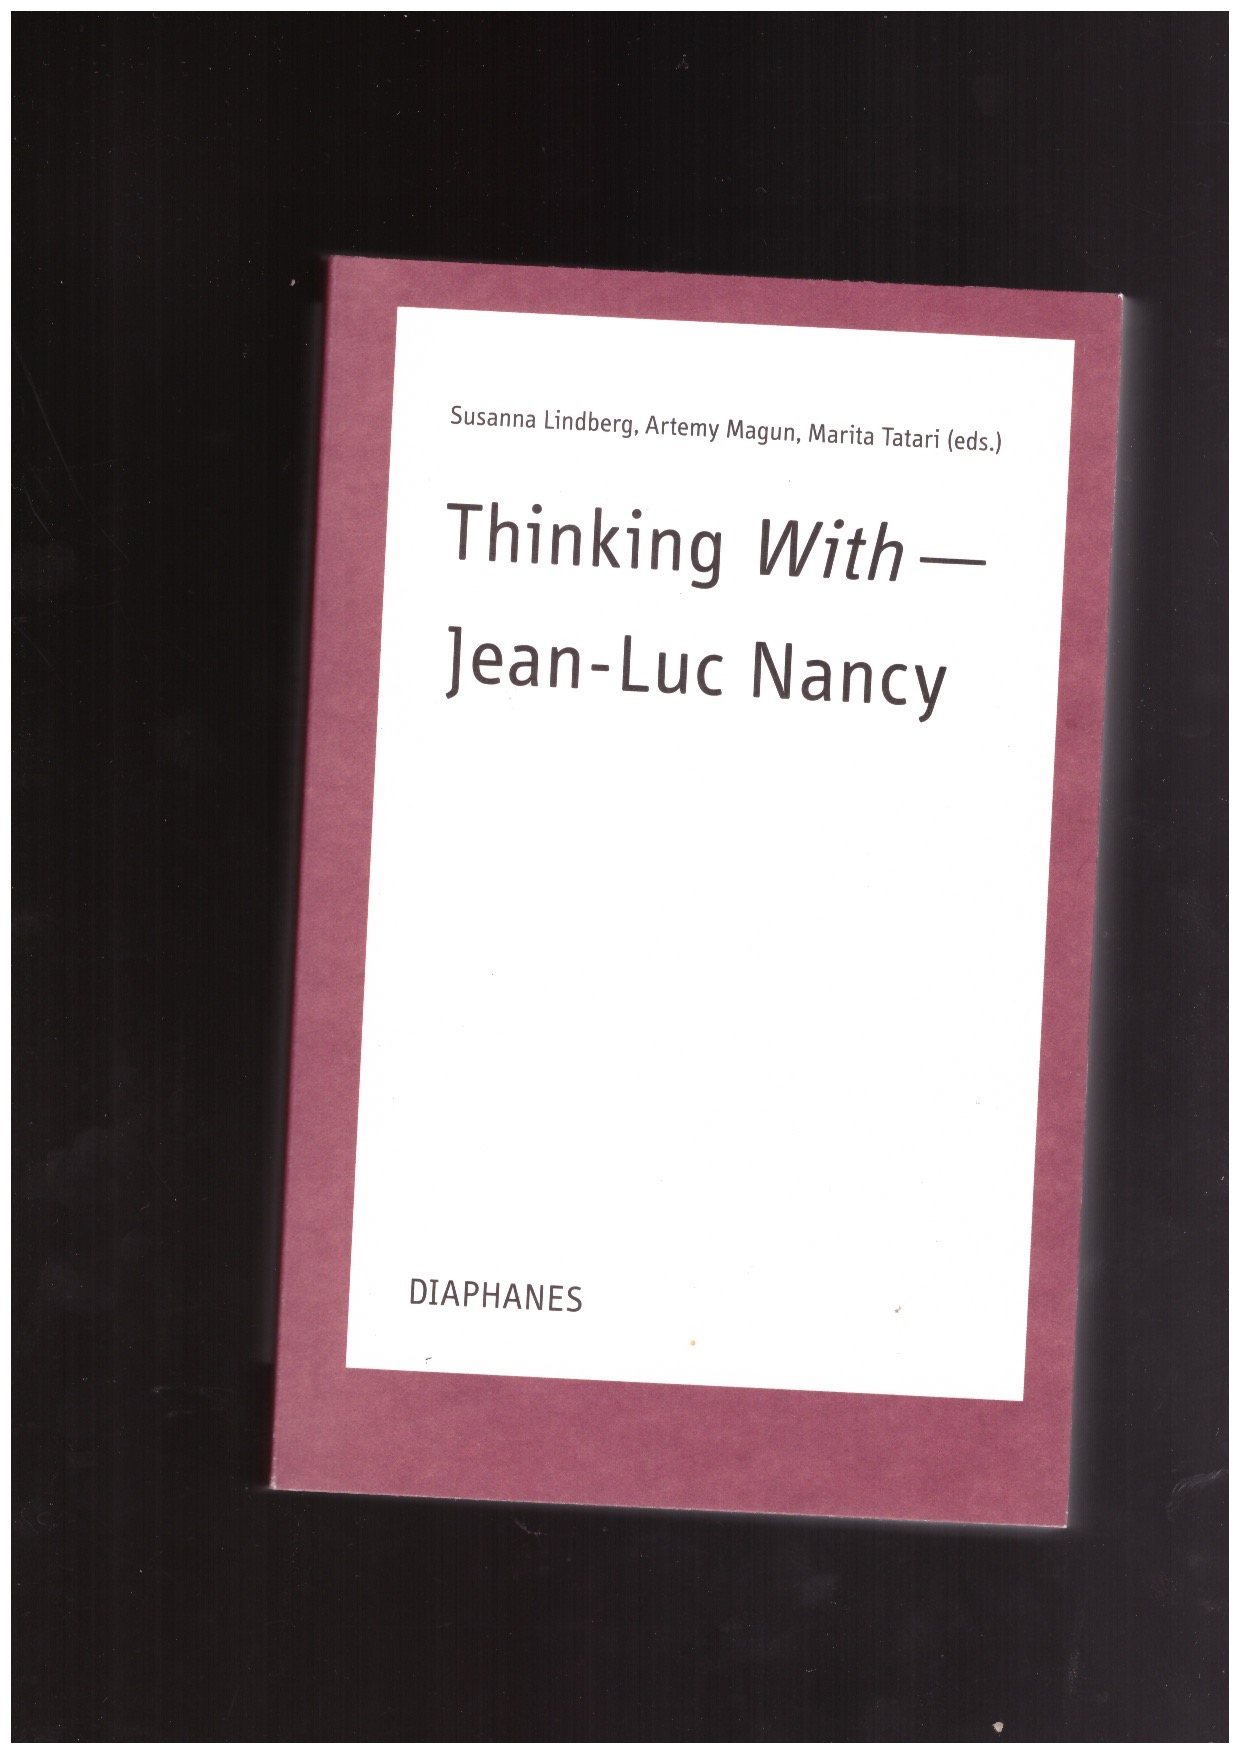 LINDBERG, Susanna; MAGUN, Artemy; TATARI, Marita (eds.) - Thinking With – Jean-Luc Nancy